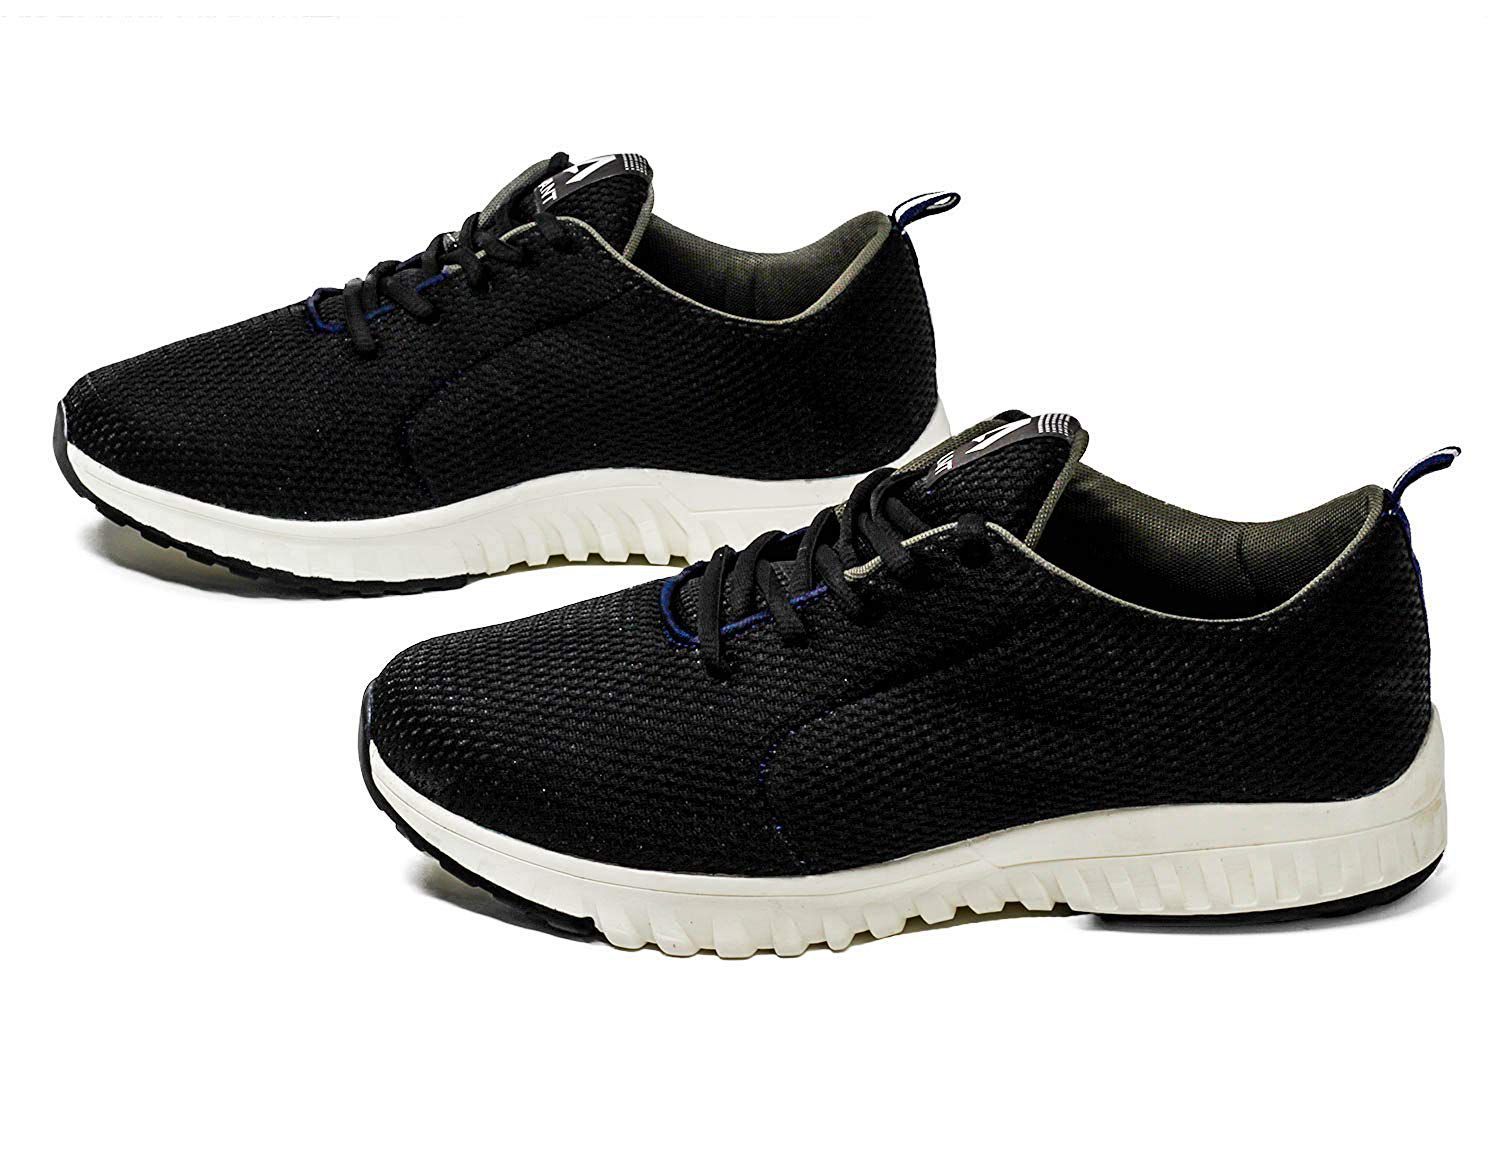 Avant Hex Black Running Shoes - Buy Avant Hex Black Running Shoes ...